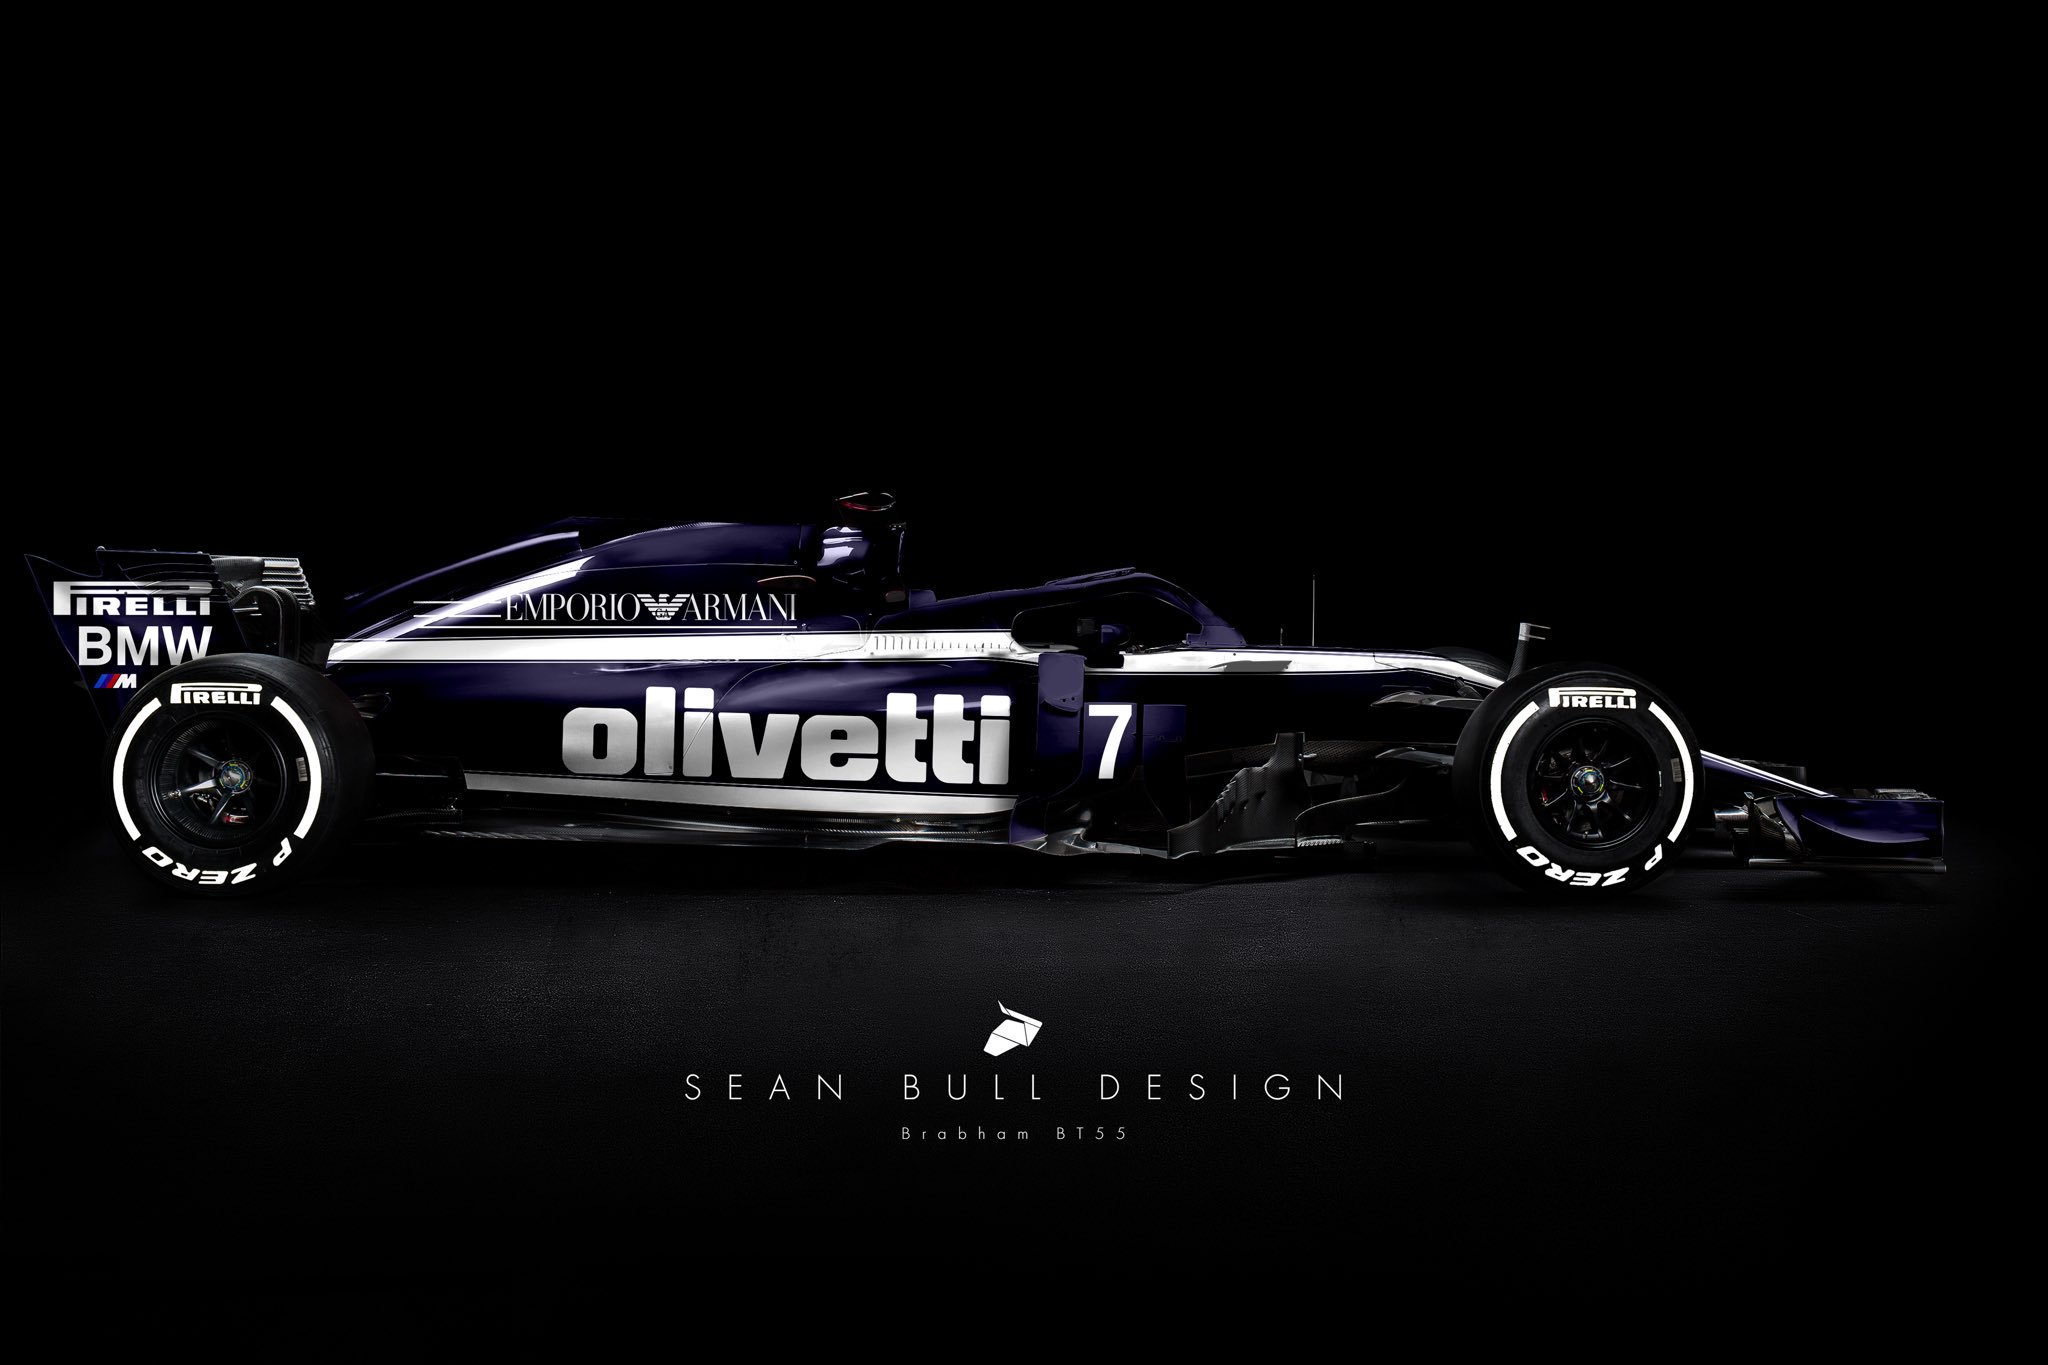 Sean Bull Design on X: Brabham BT55 #brabham #f1 #f12018 https